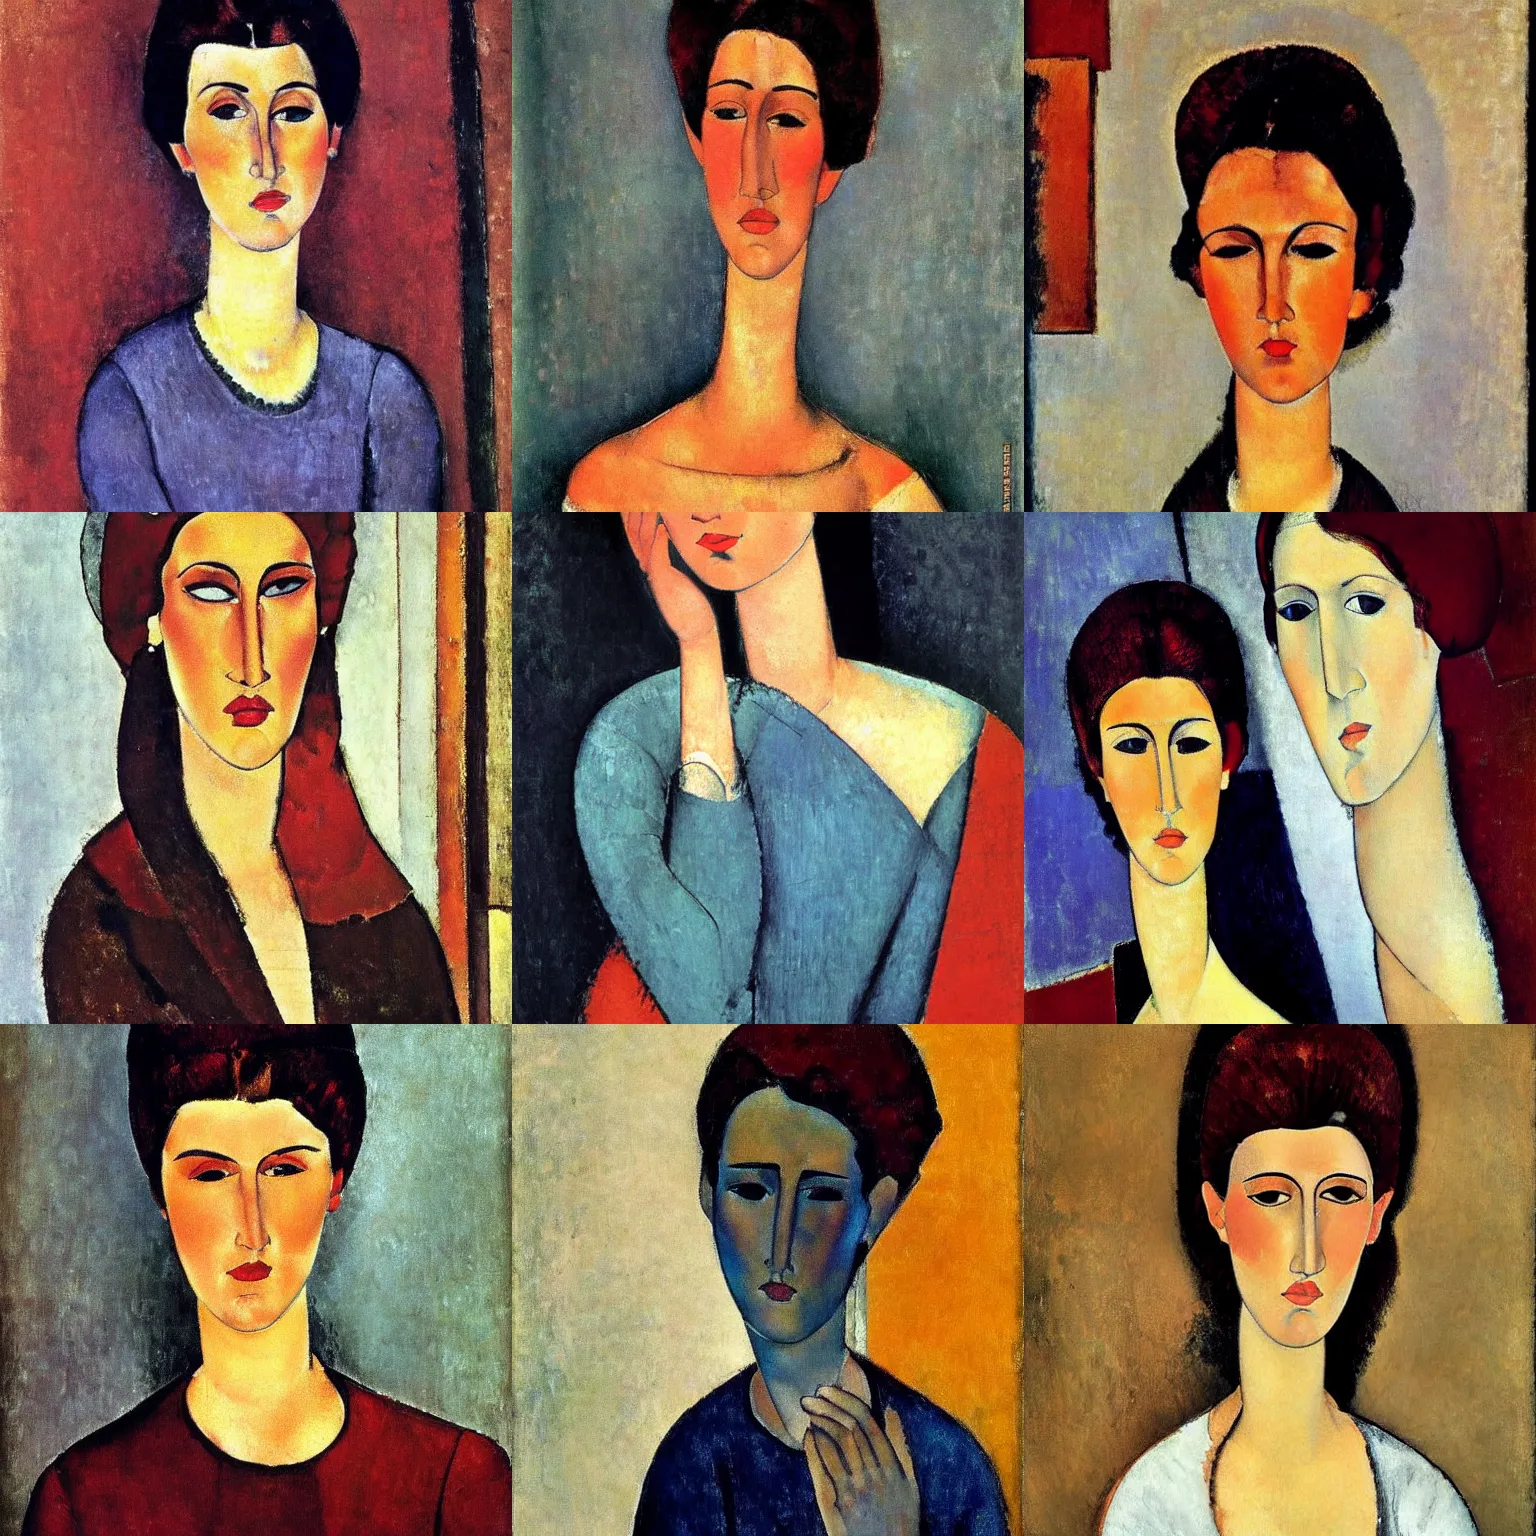 Prompt: beautiful woman portrait, by Amedeo Modigliani